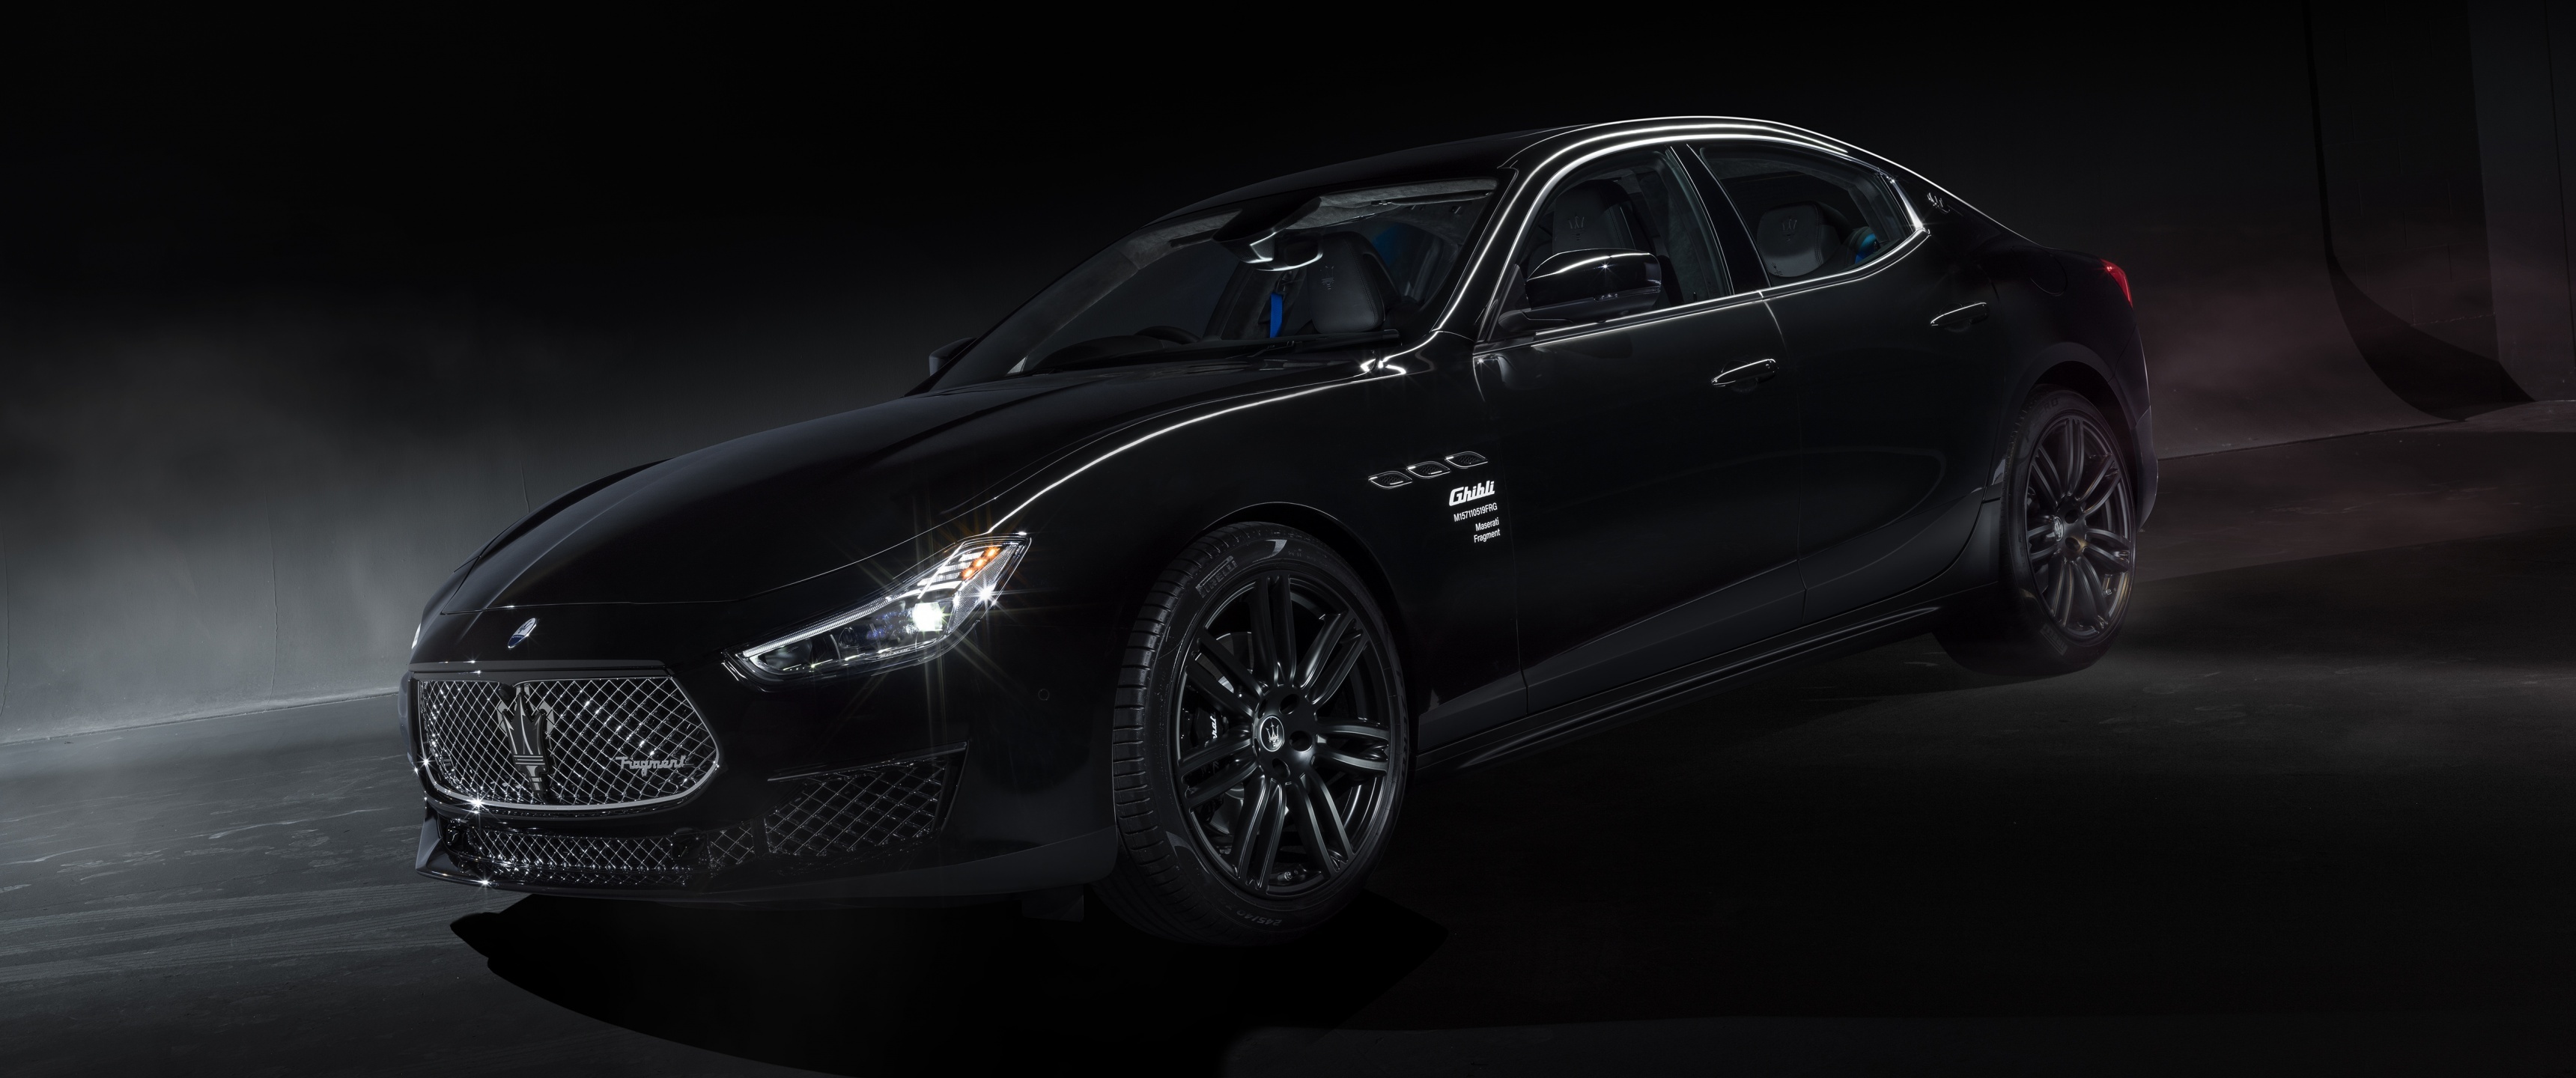 Maserati Ghibli, Operanera edition, Dark background, Black cars, 3440x1440 Dual Screen Desktop